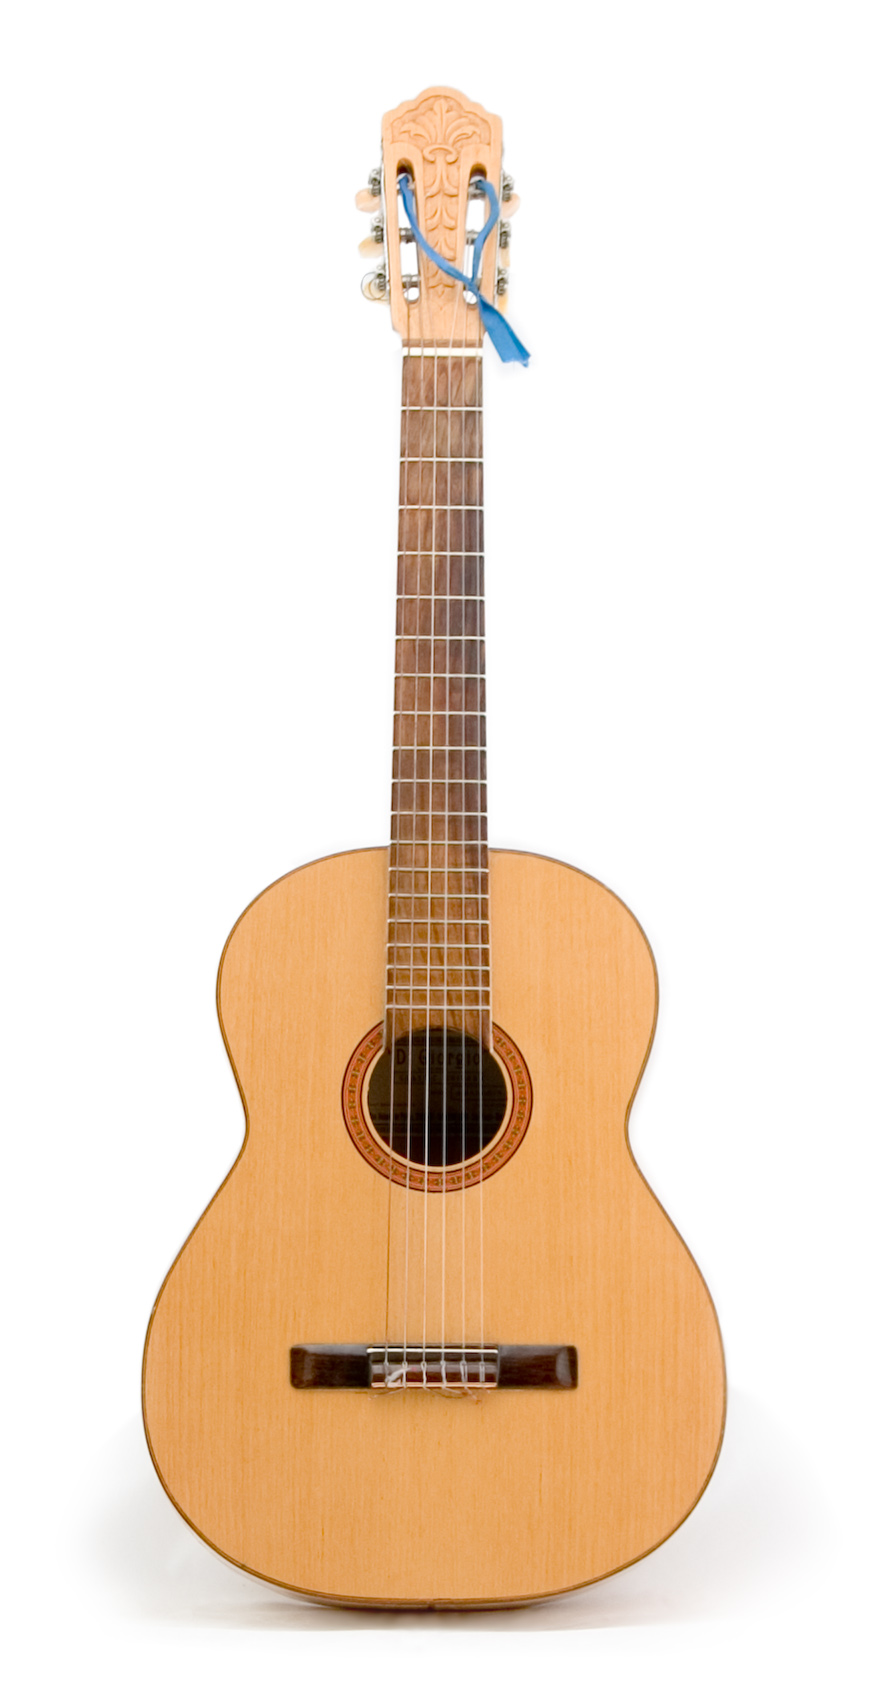 File:Guitar 1.jpg - Wikipedia